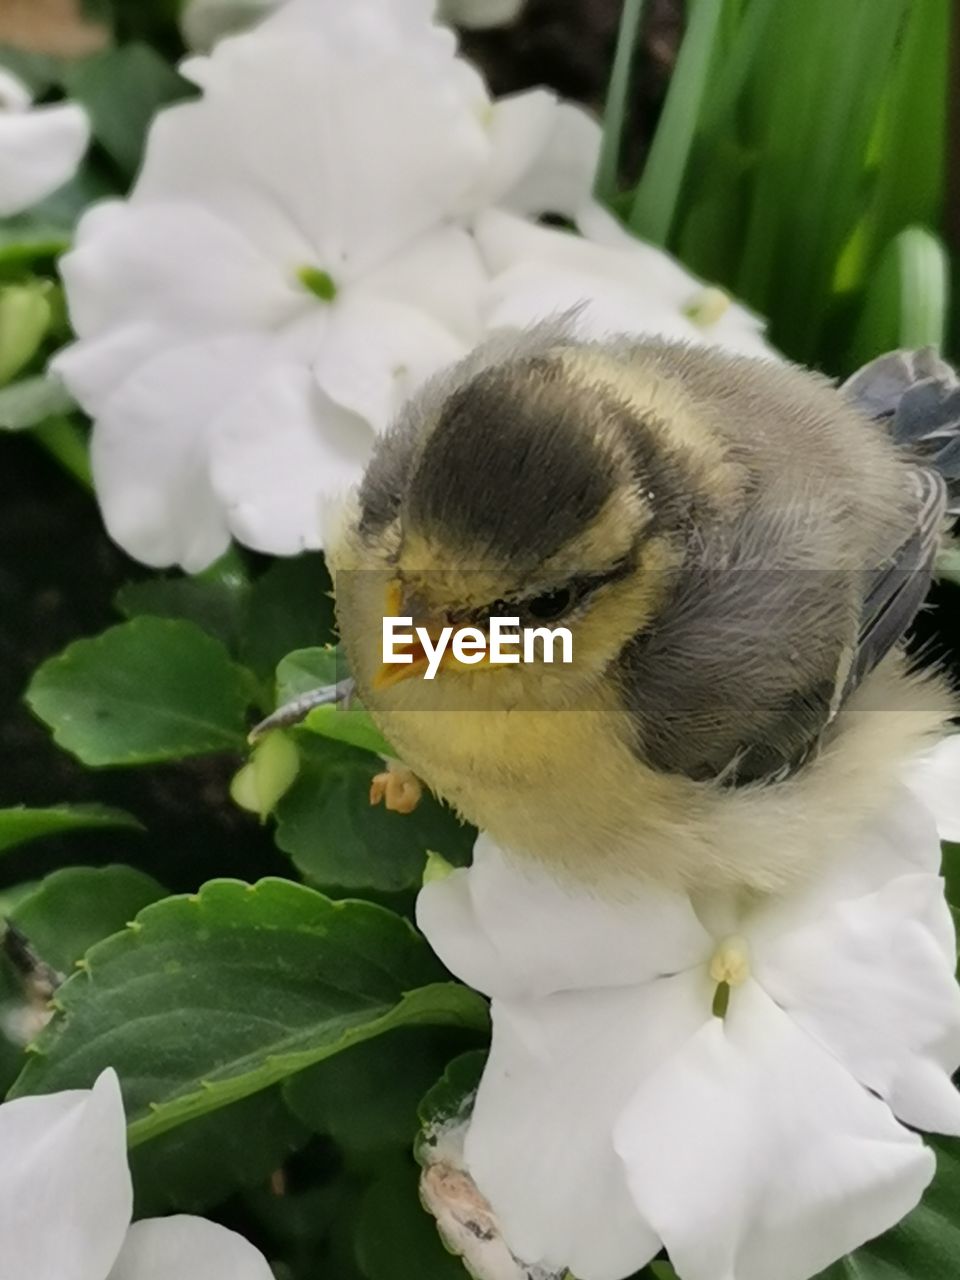 CLOSE-UP OF A BIRD IN A FLOWER